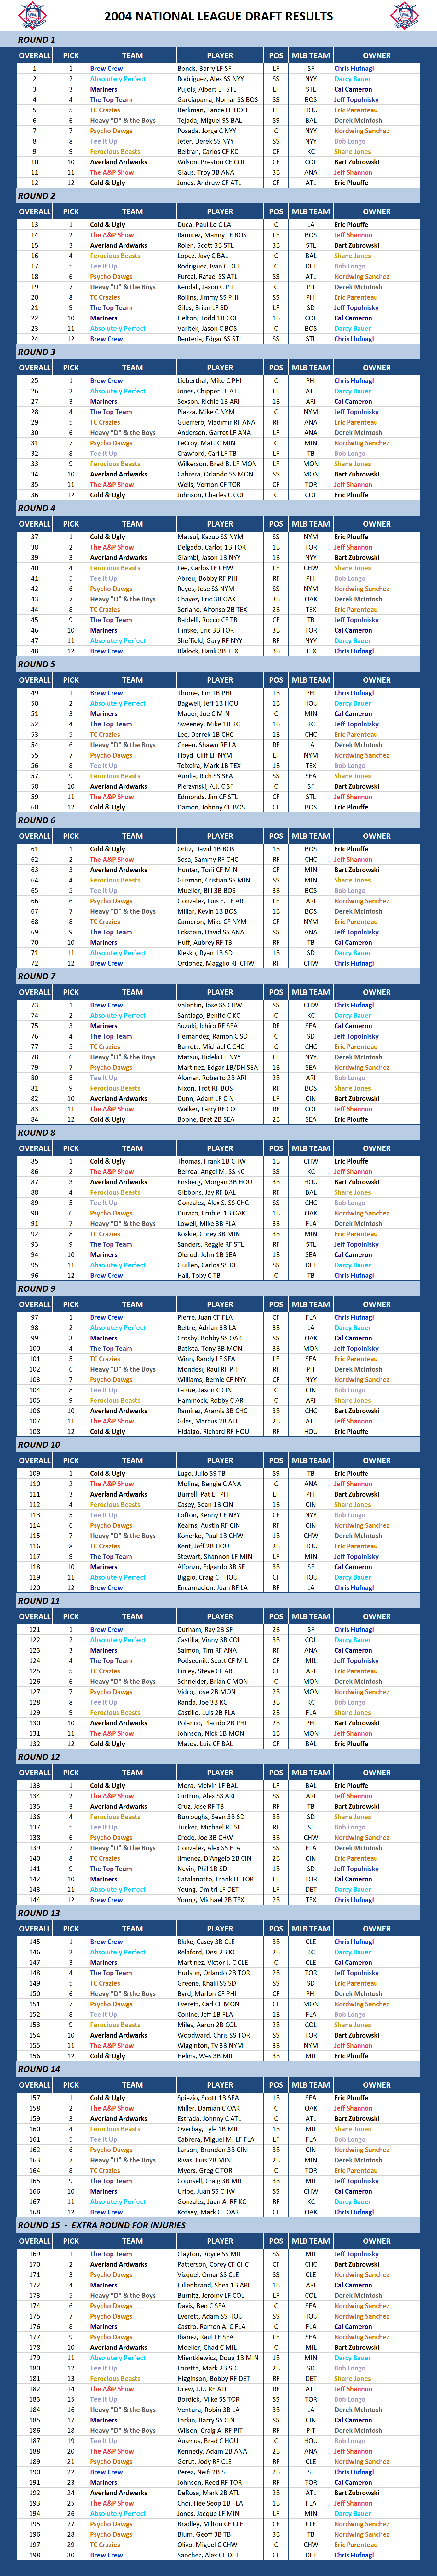 2004 Major league Baseball Draft Results